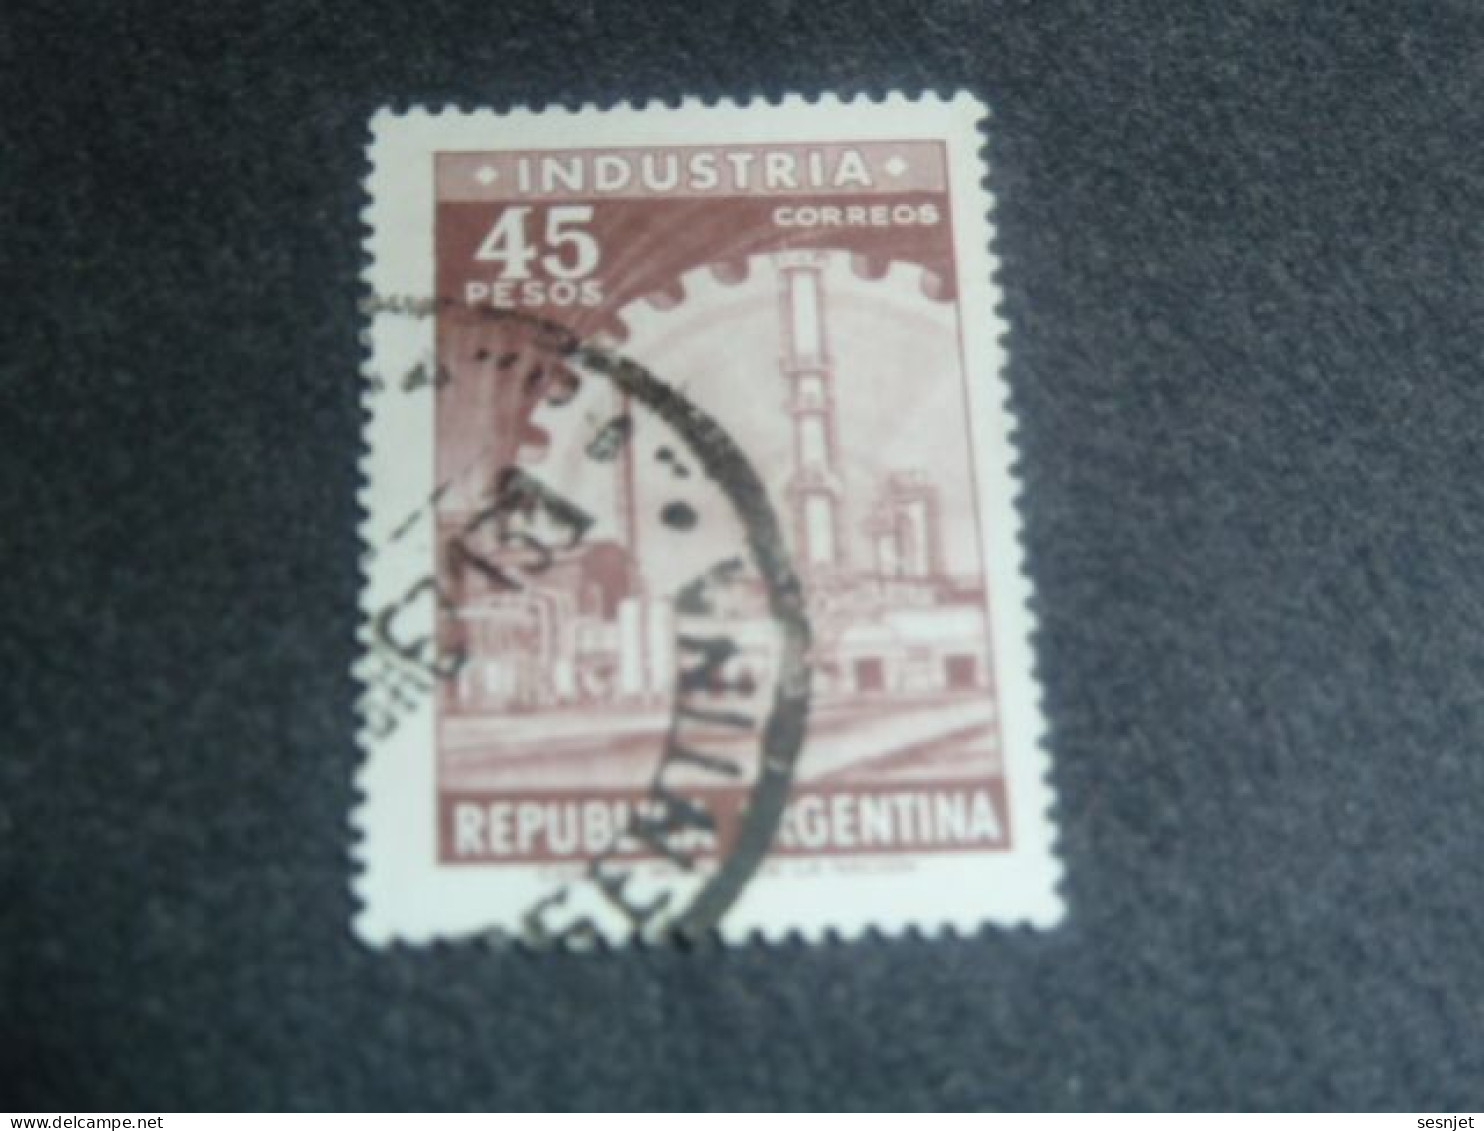 Republica Argentina - Industria - 45 Pesos - Yt 734 - Brun-lilas - Oblitéré - Année 1966 - - Gebruikt